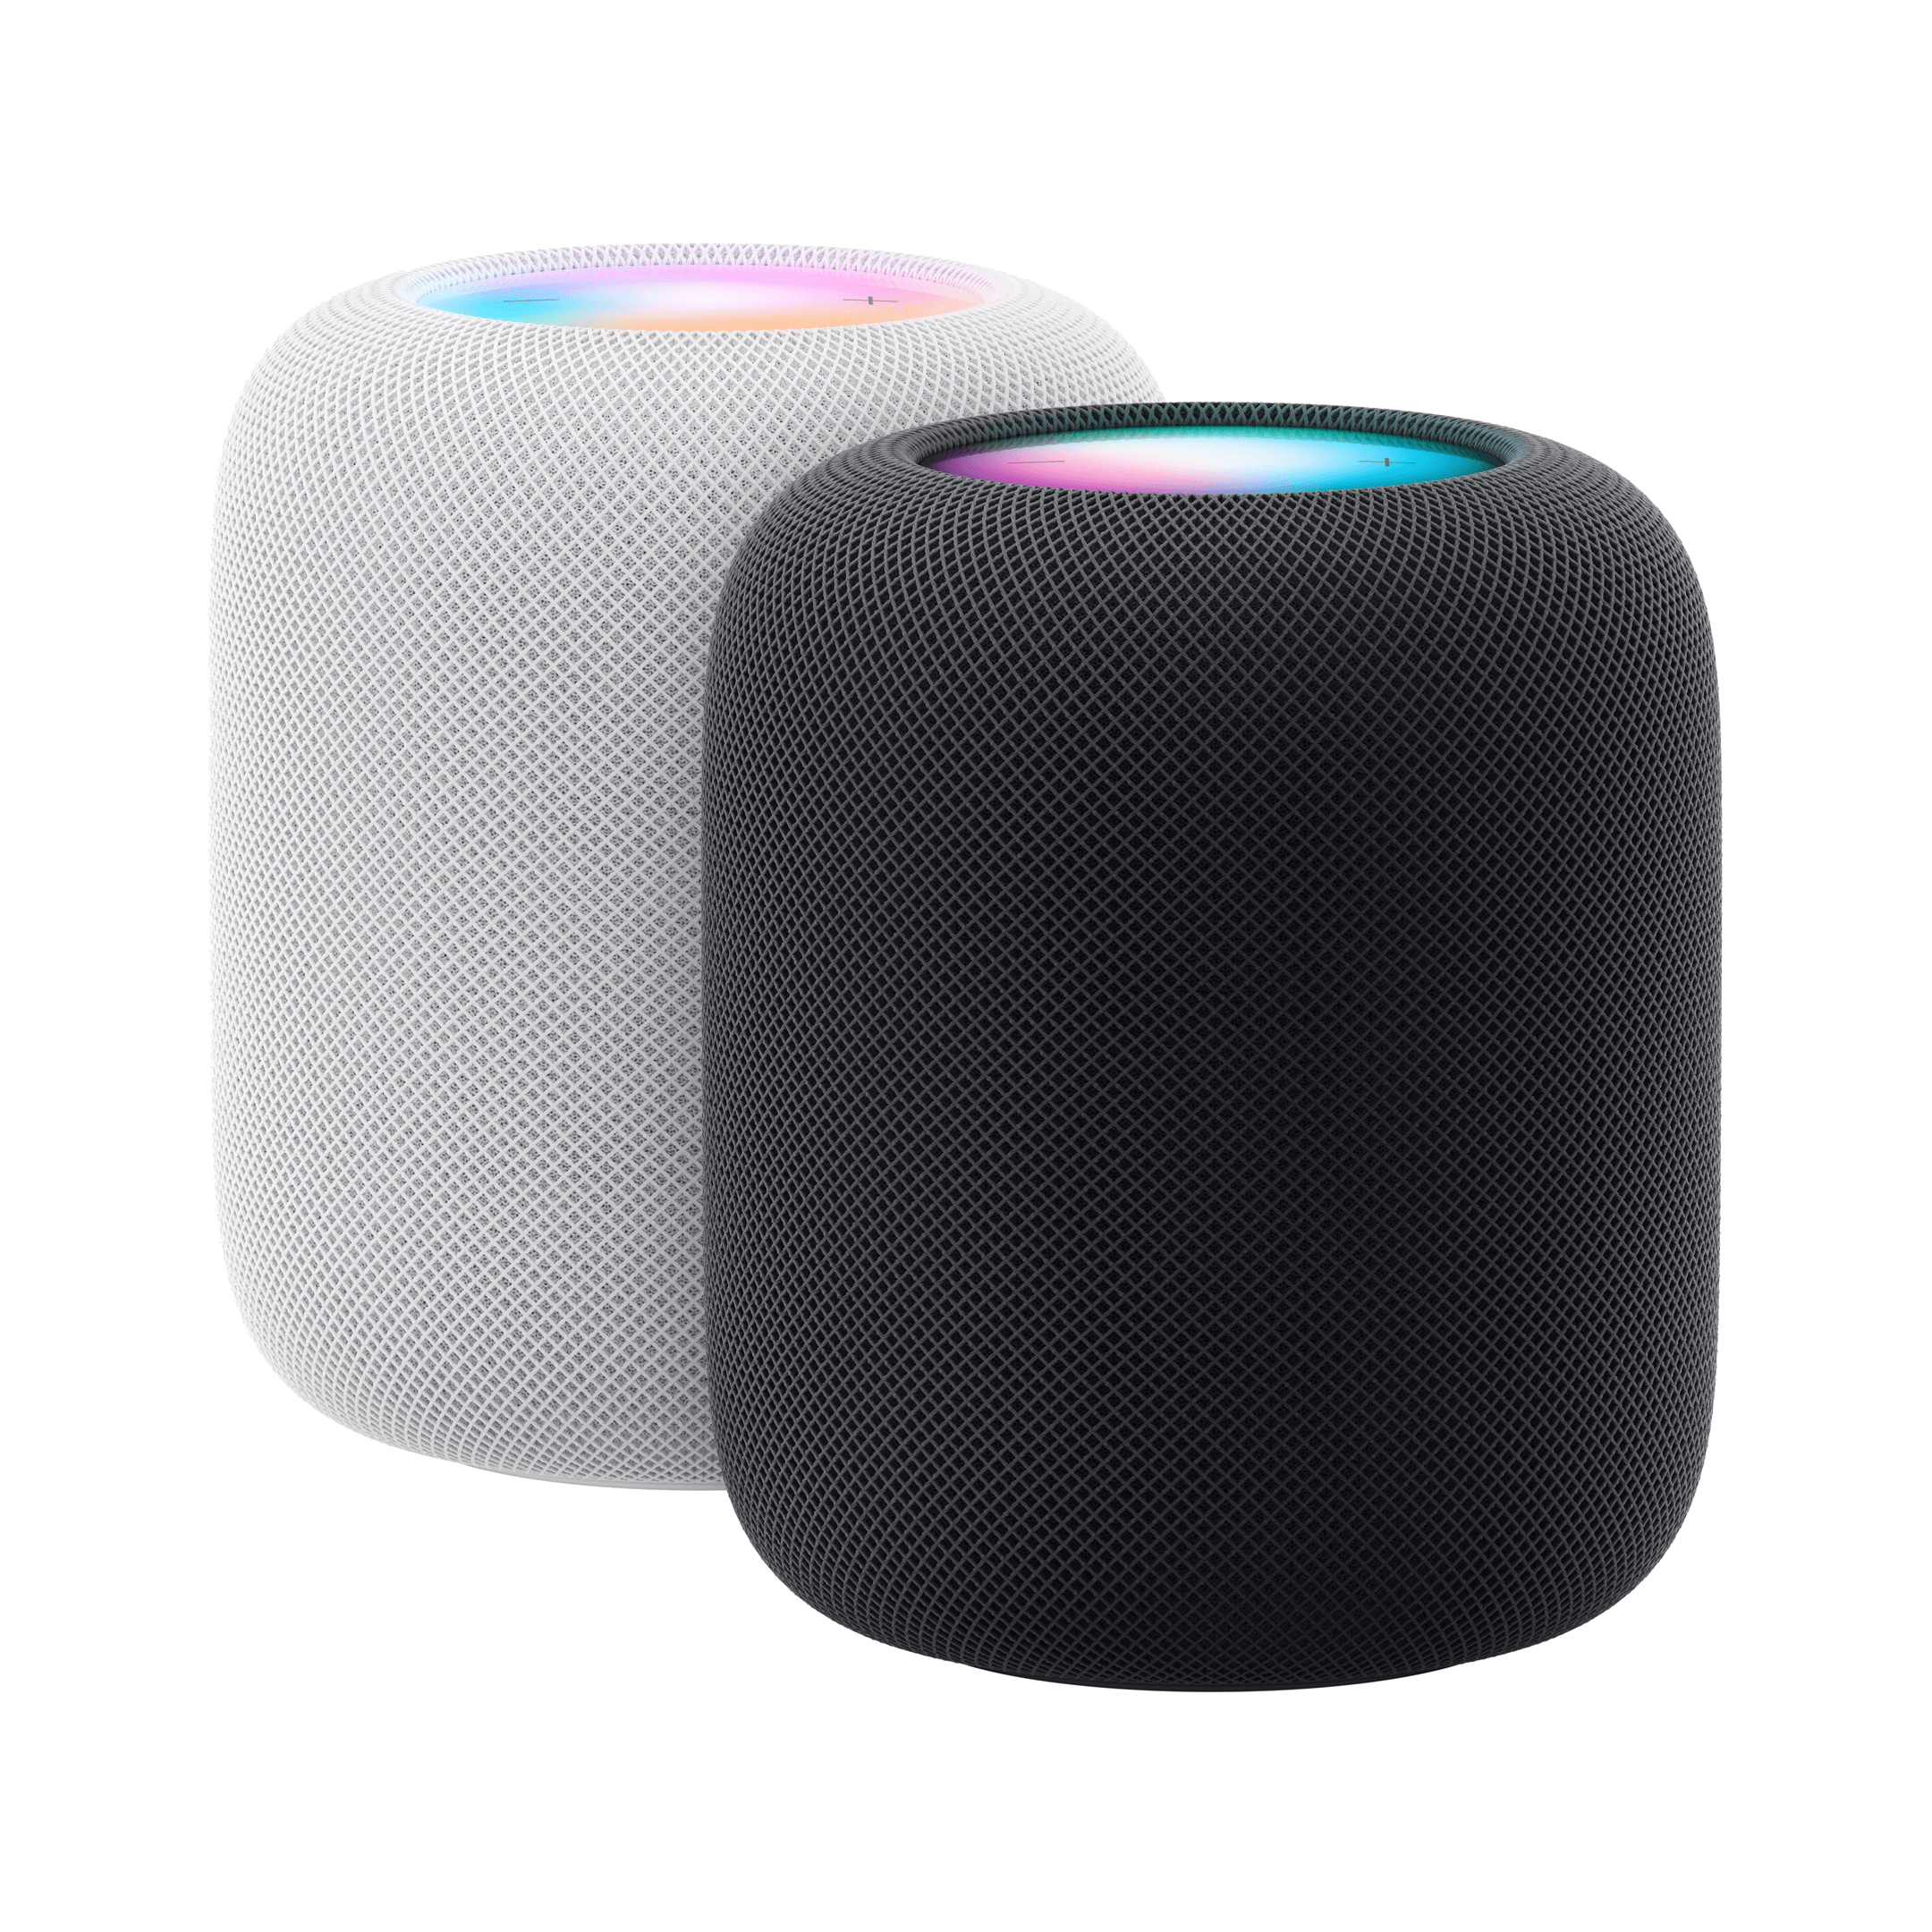 Apple HomePod 2 draadloze speaker gaat euro kosten | TechFi